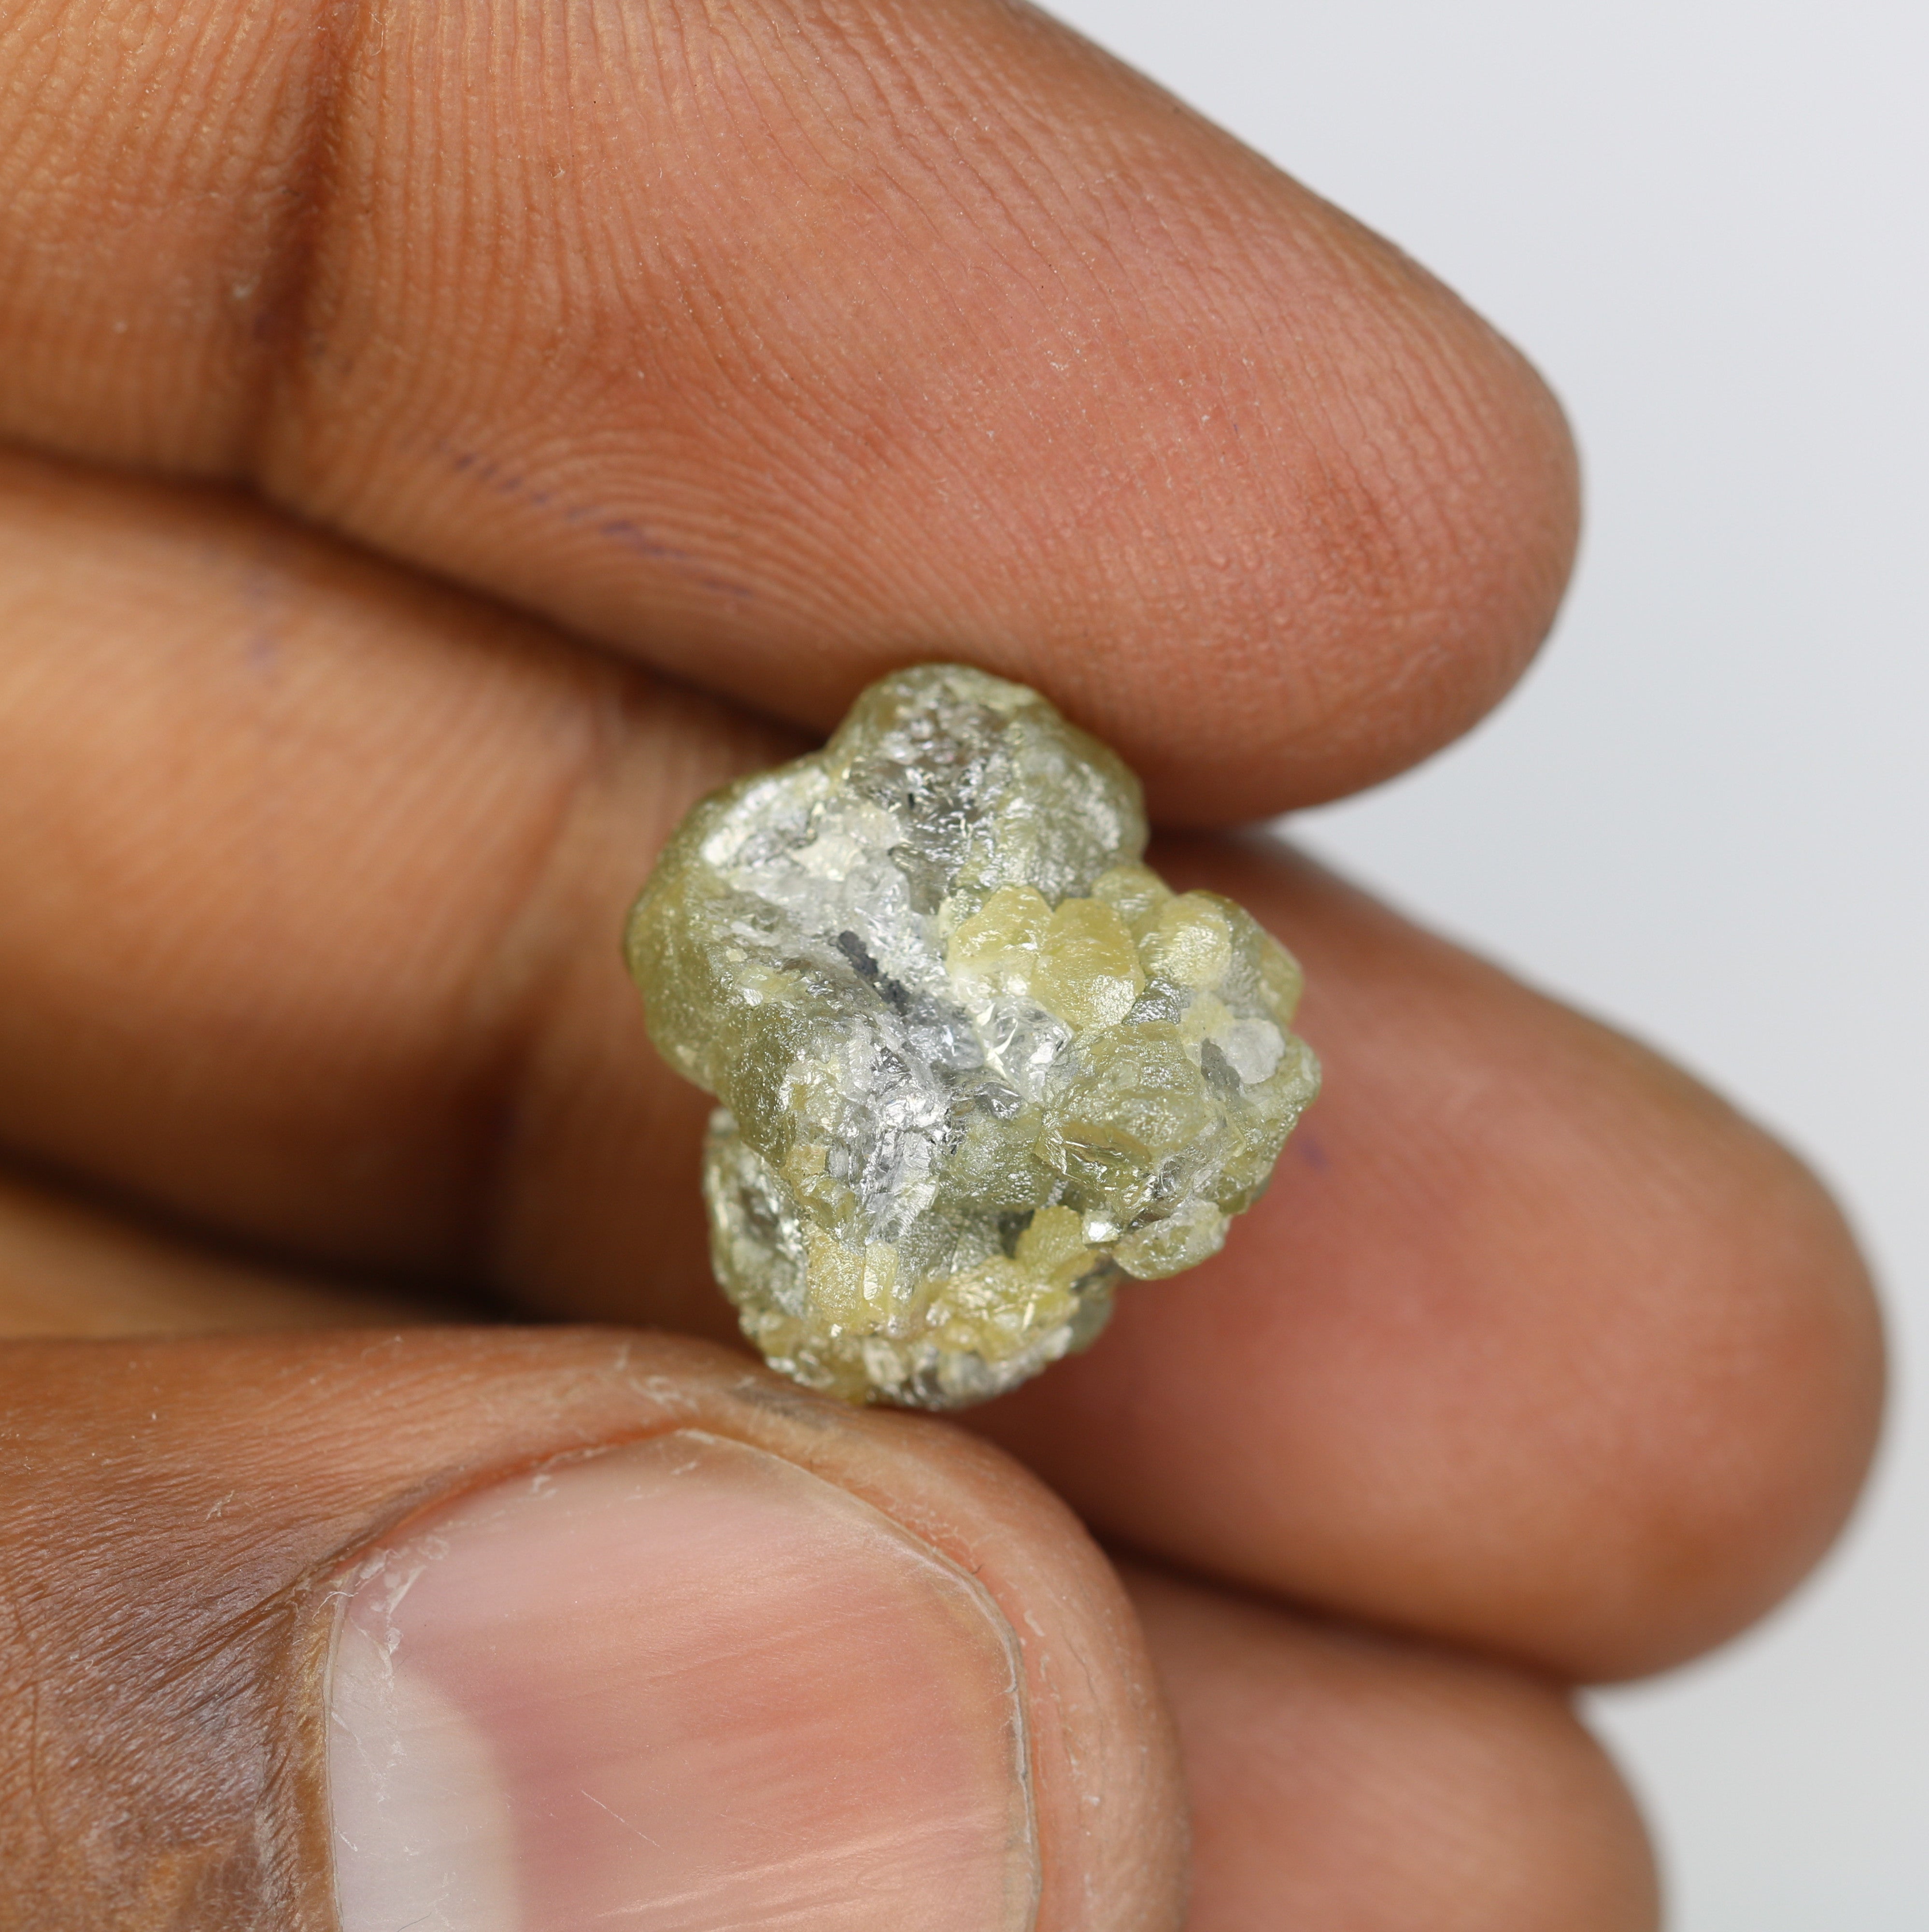 14.10 CT Uncut Raw Greenish Rough Diamond For Engagement Ring